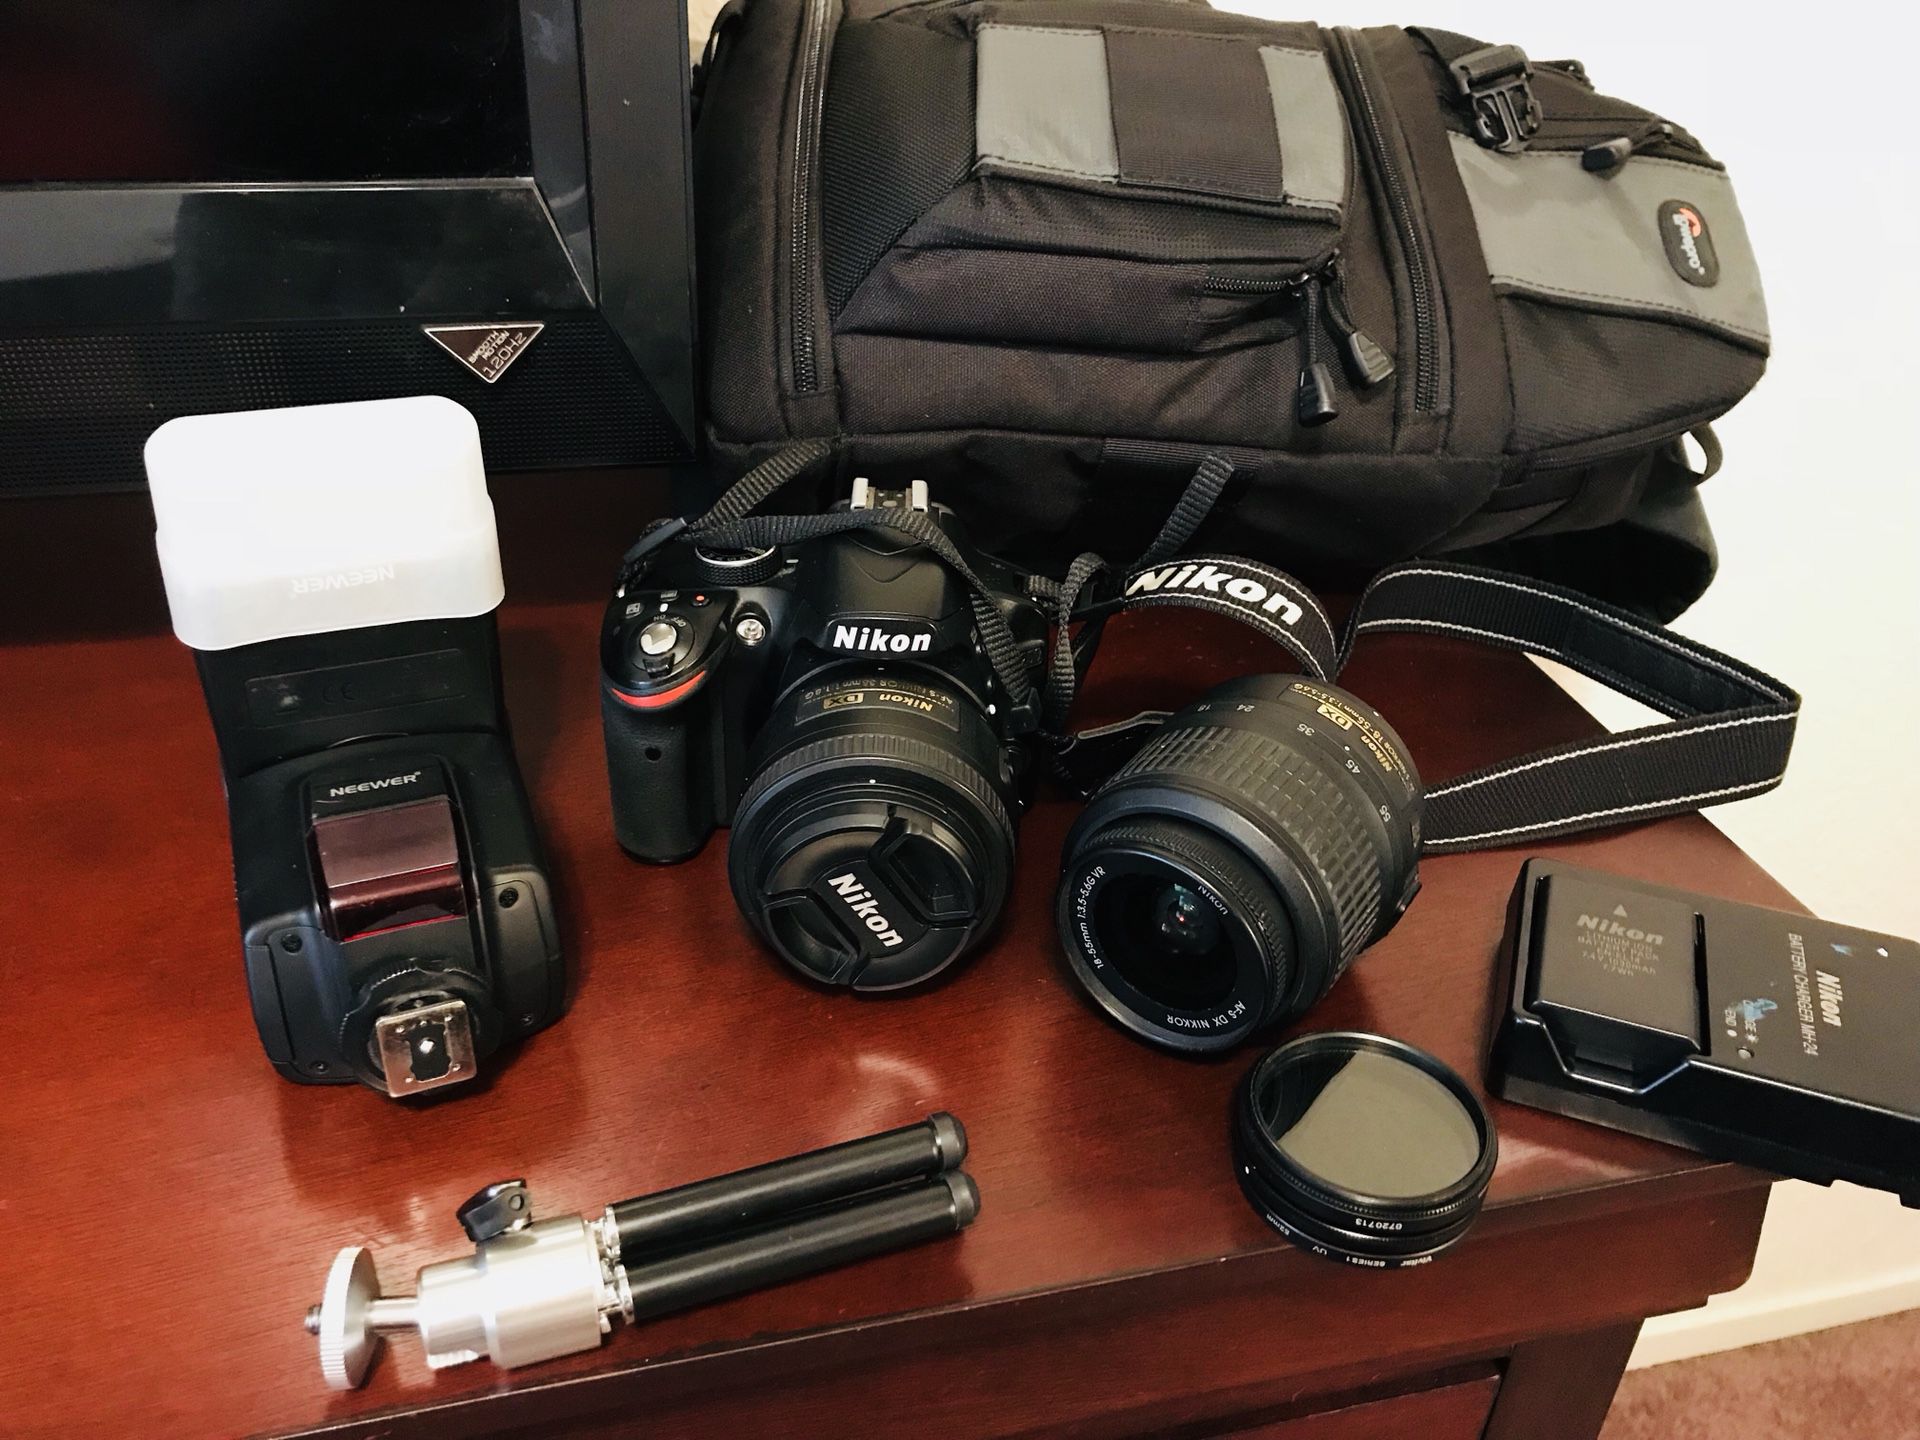 Nikon Camera and accessories